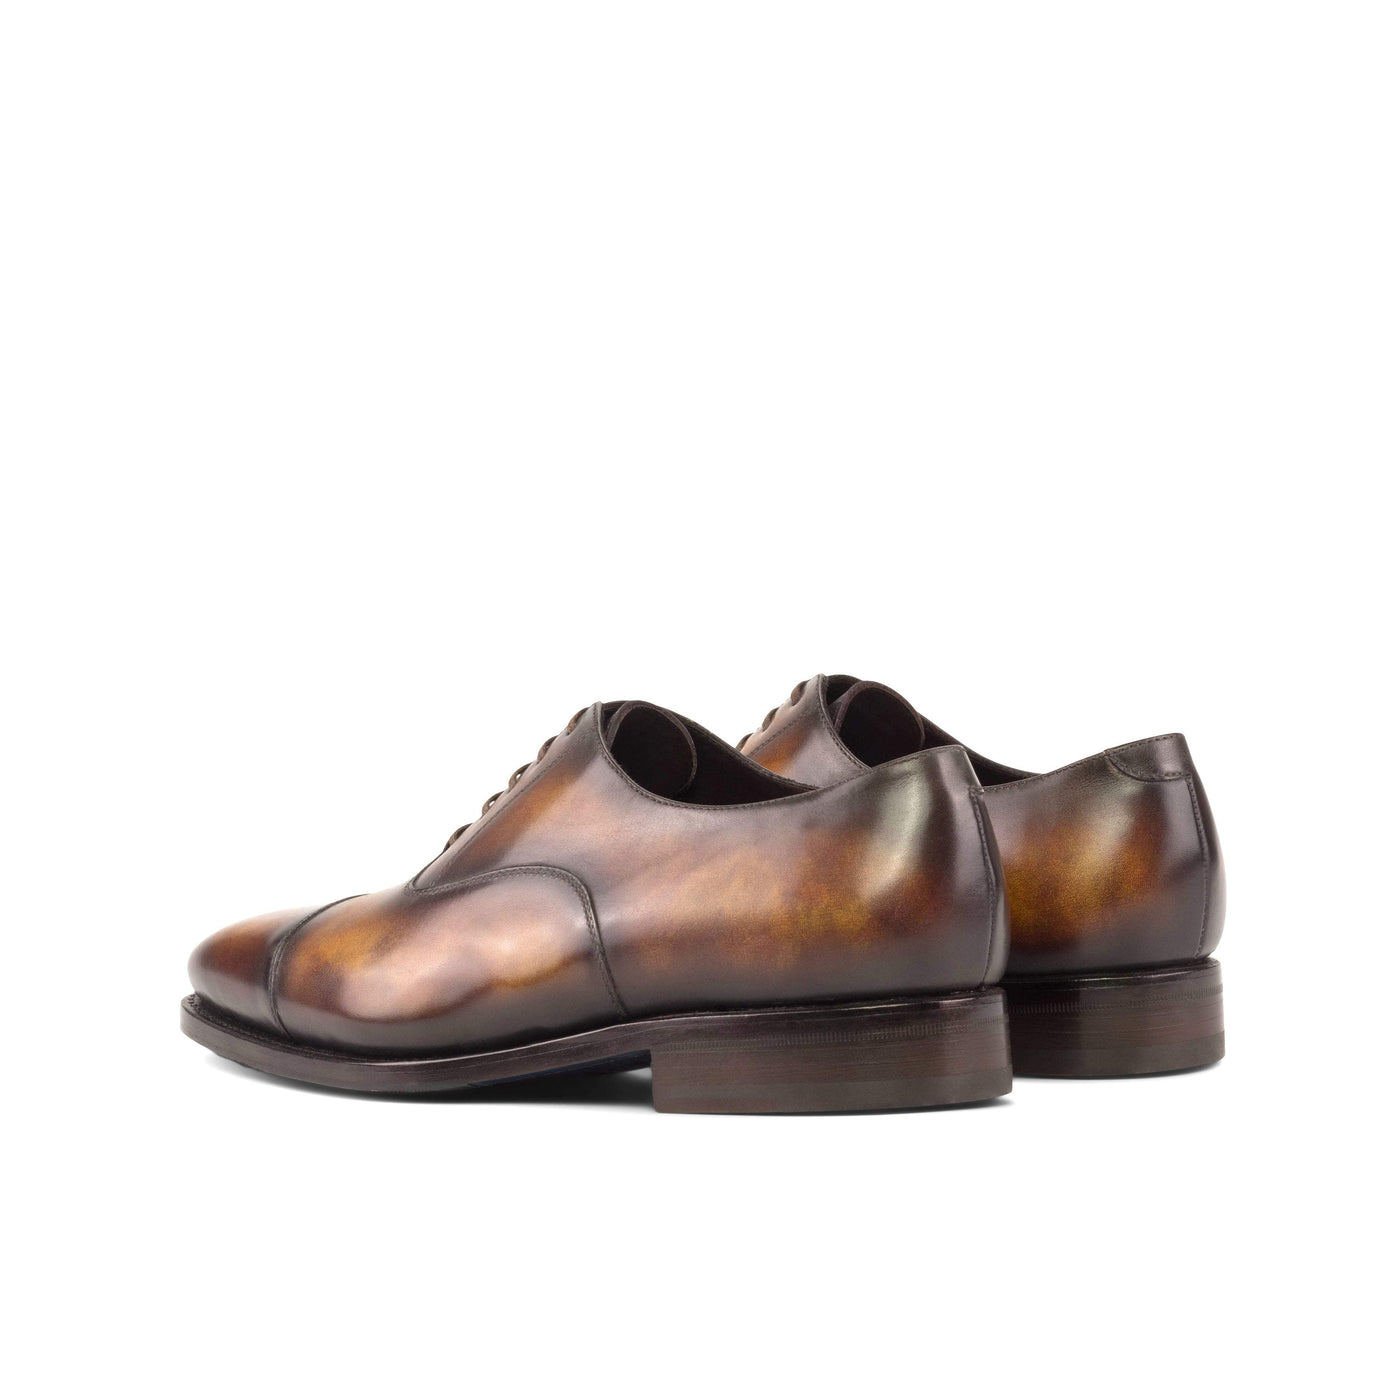 Men's Oxford Shoes Patina Leather Goodyear Welt Burgundy 5252 4- MERRIMIUM